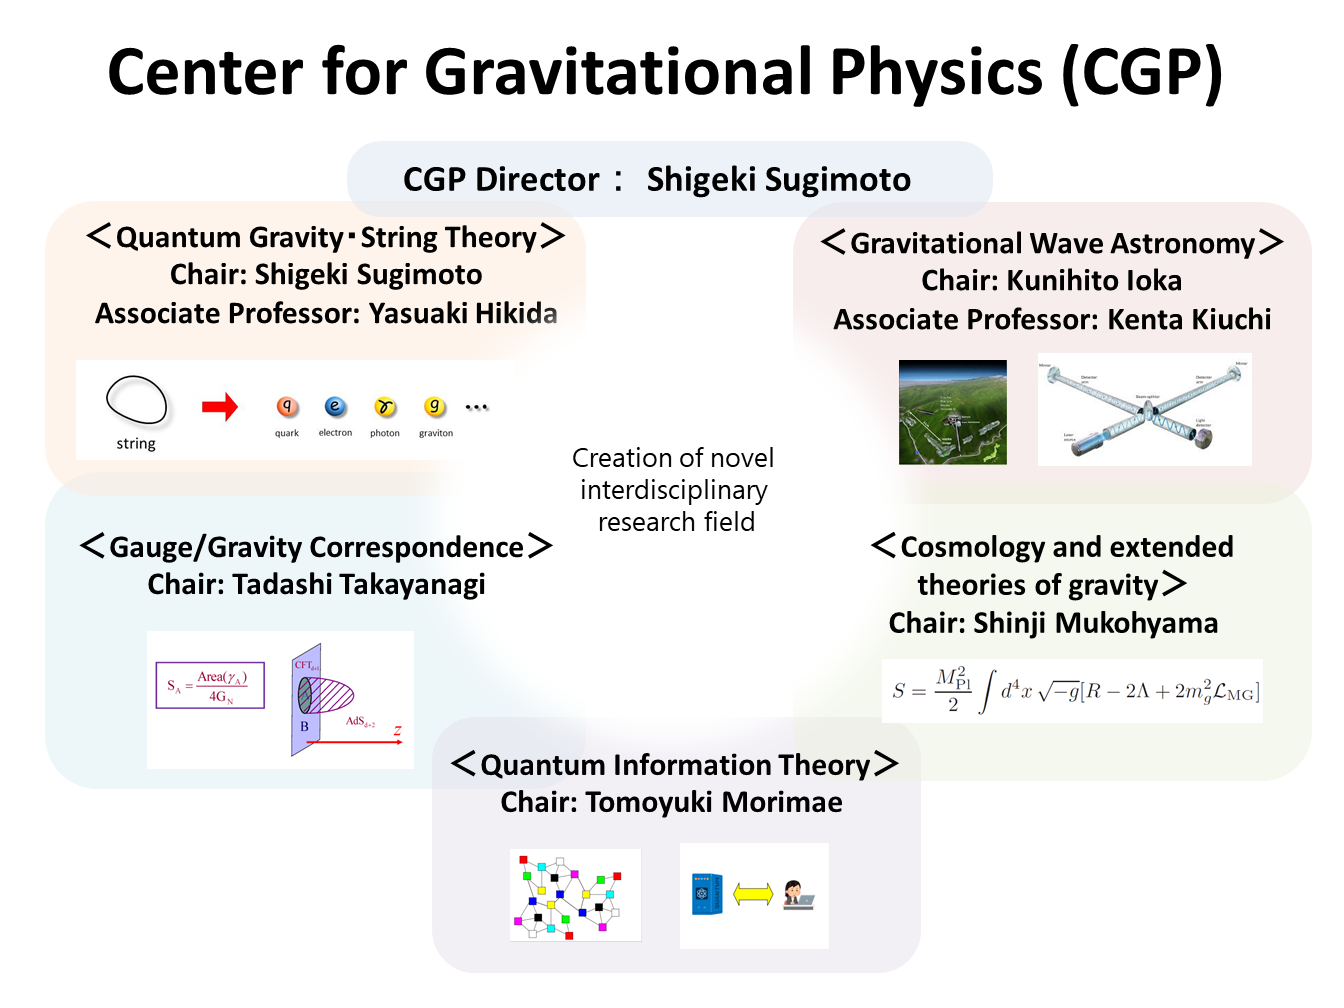 The Center for Gravitational Physics, Yukawa Institute for